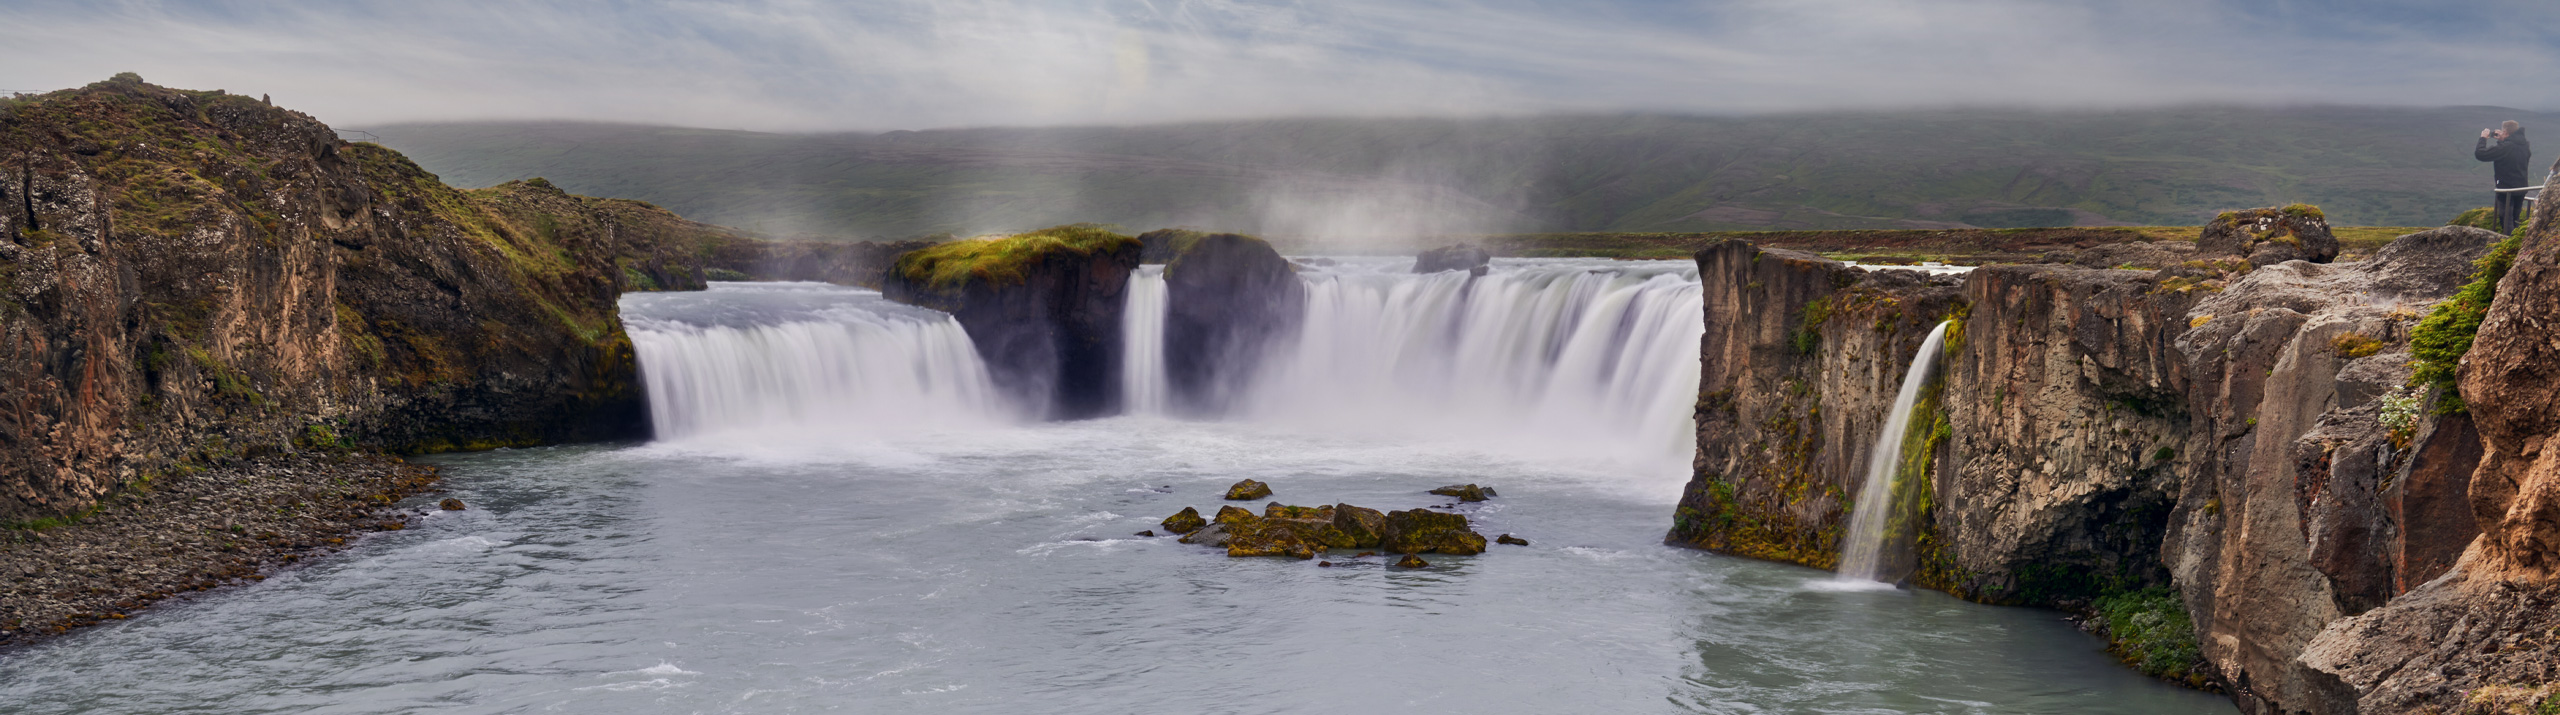 Godafoss vandfaldet - vandfald i Island